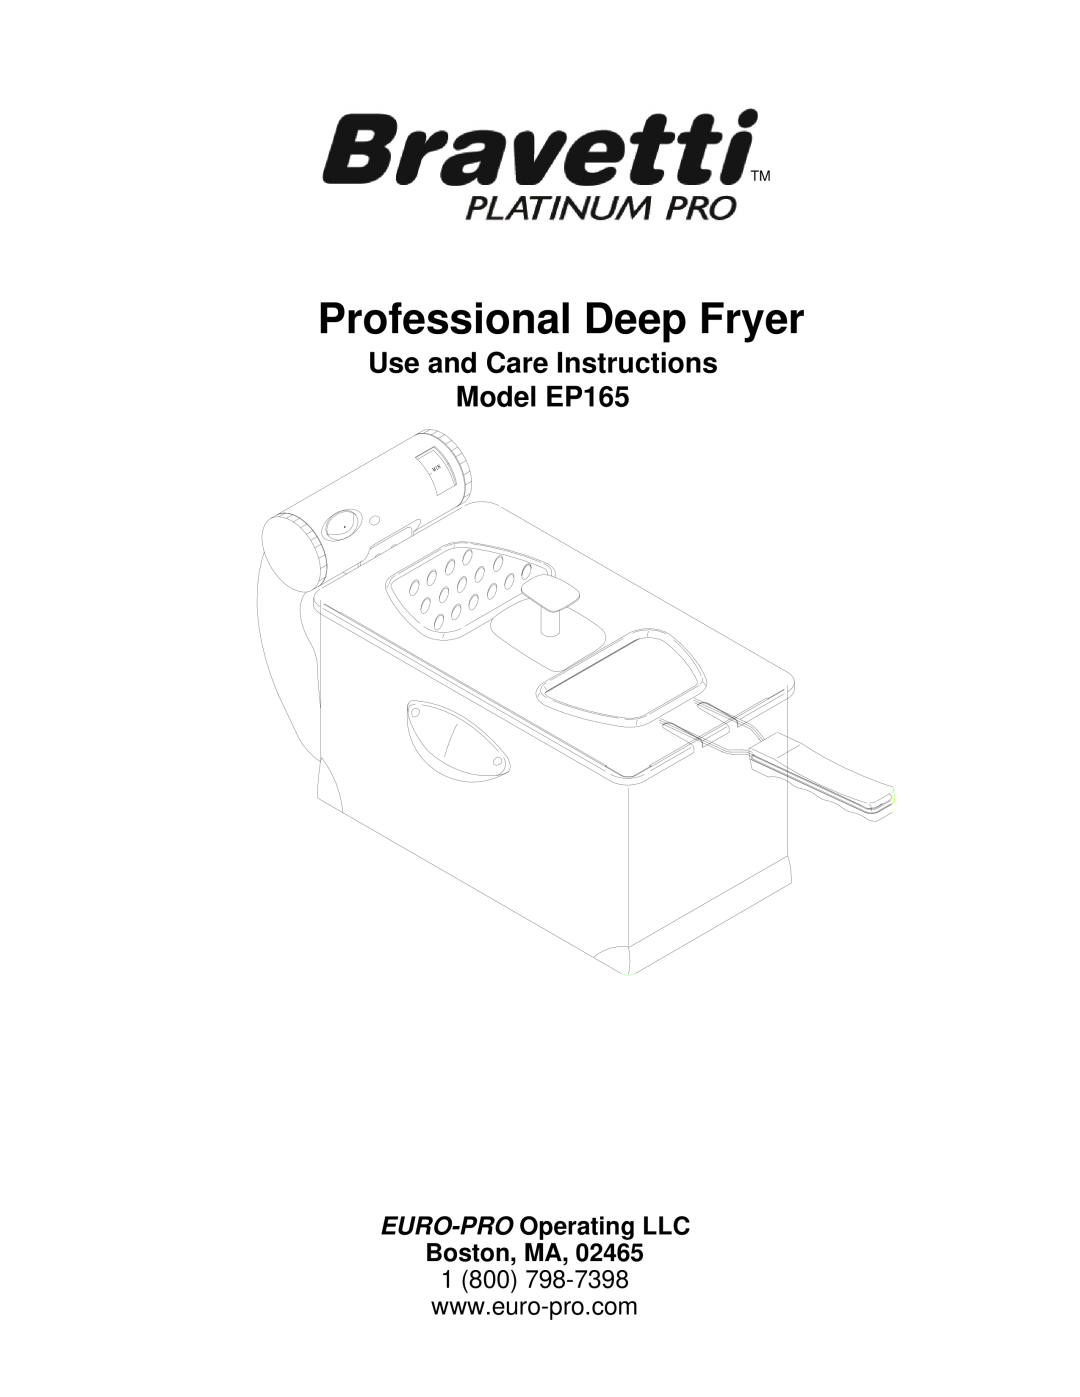 Bravetti manual Use and Care Instructions Model EP165, EURO-PRO Operating LLC Boston, MA, Professional Deep Fryer 